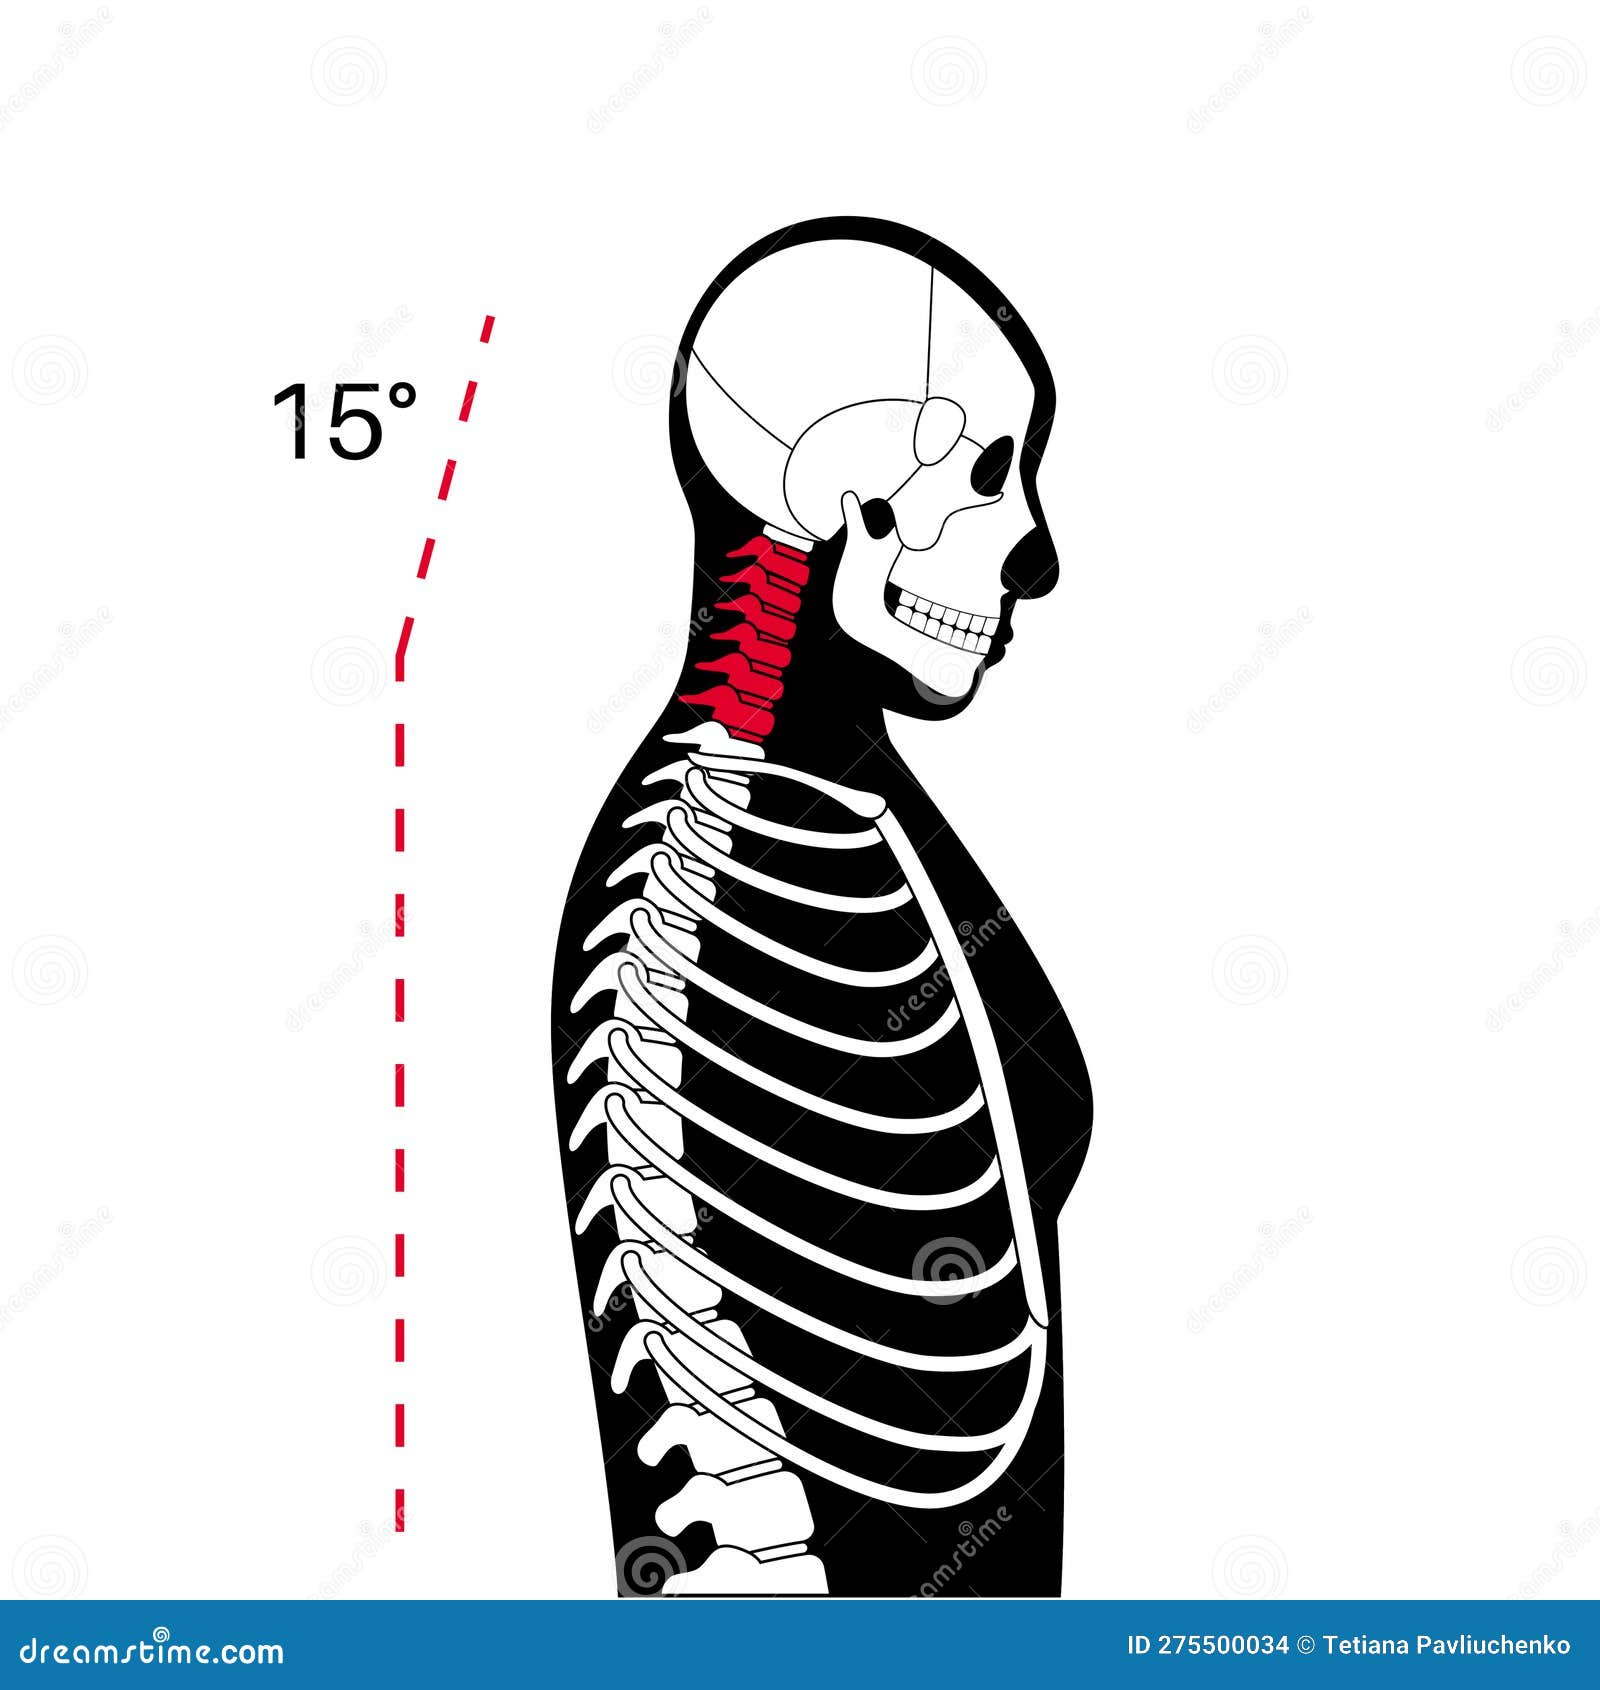 Neck vertebrae deformity stock vector. Illustration of chiropractor ...